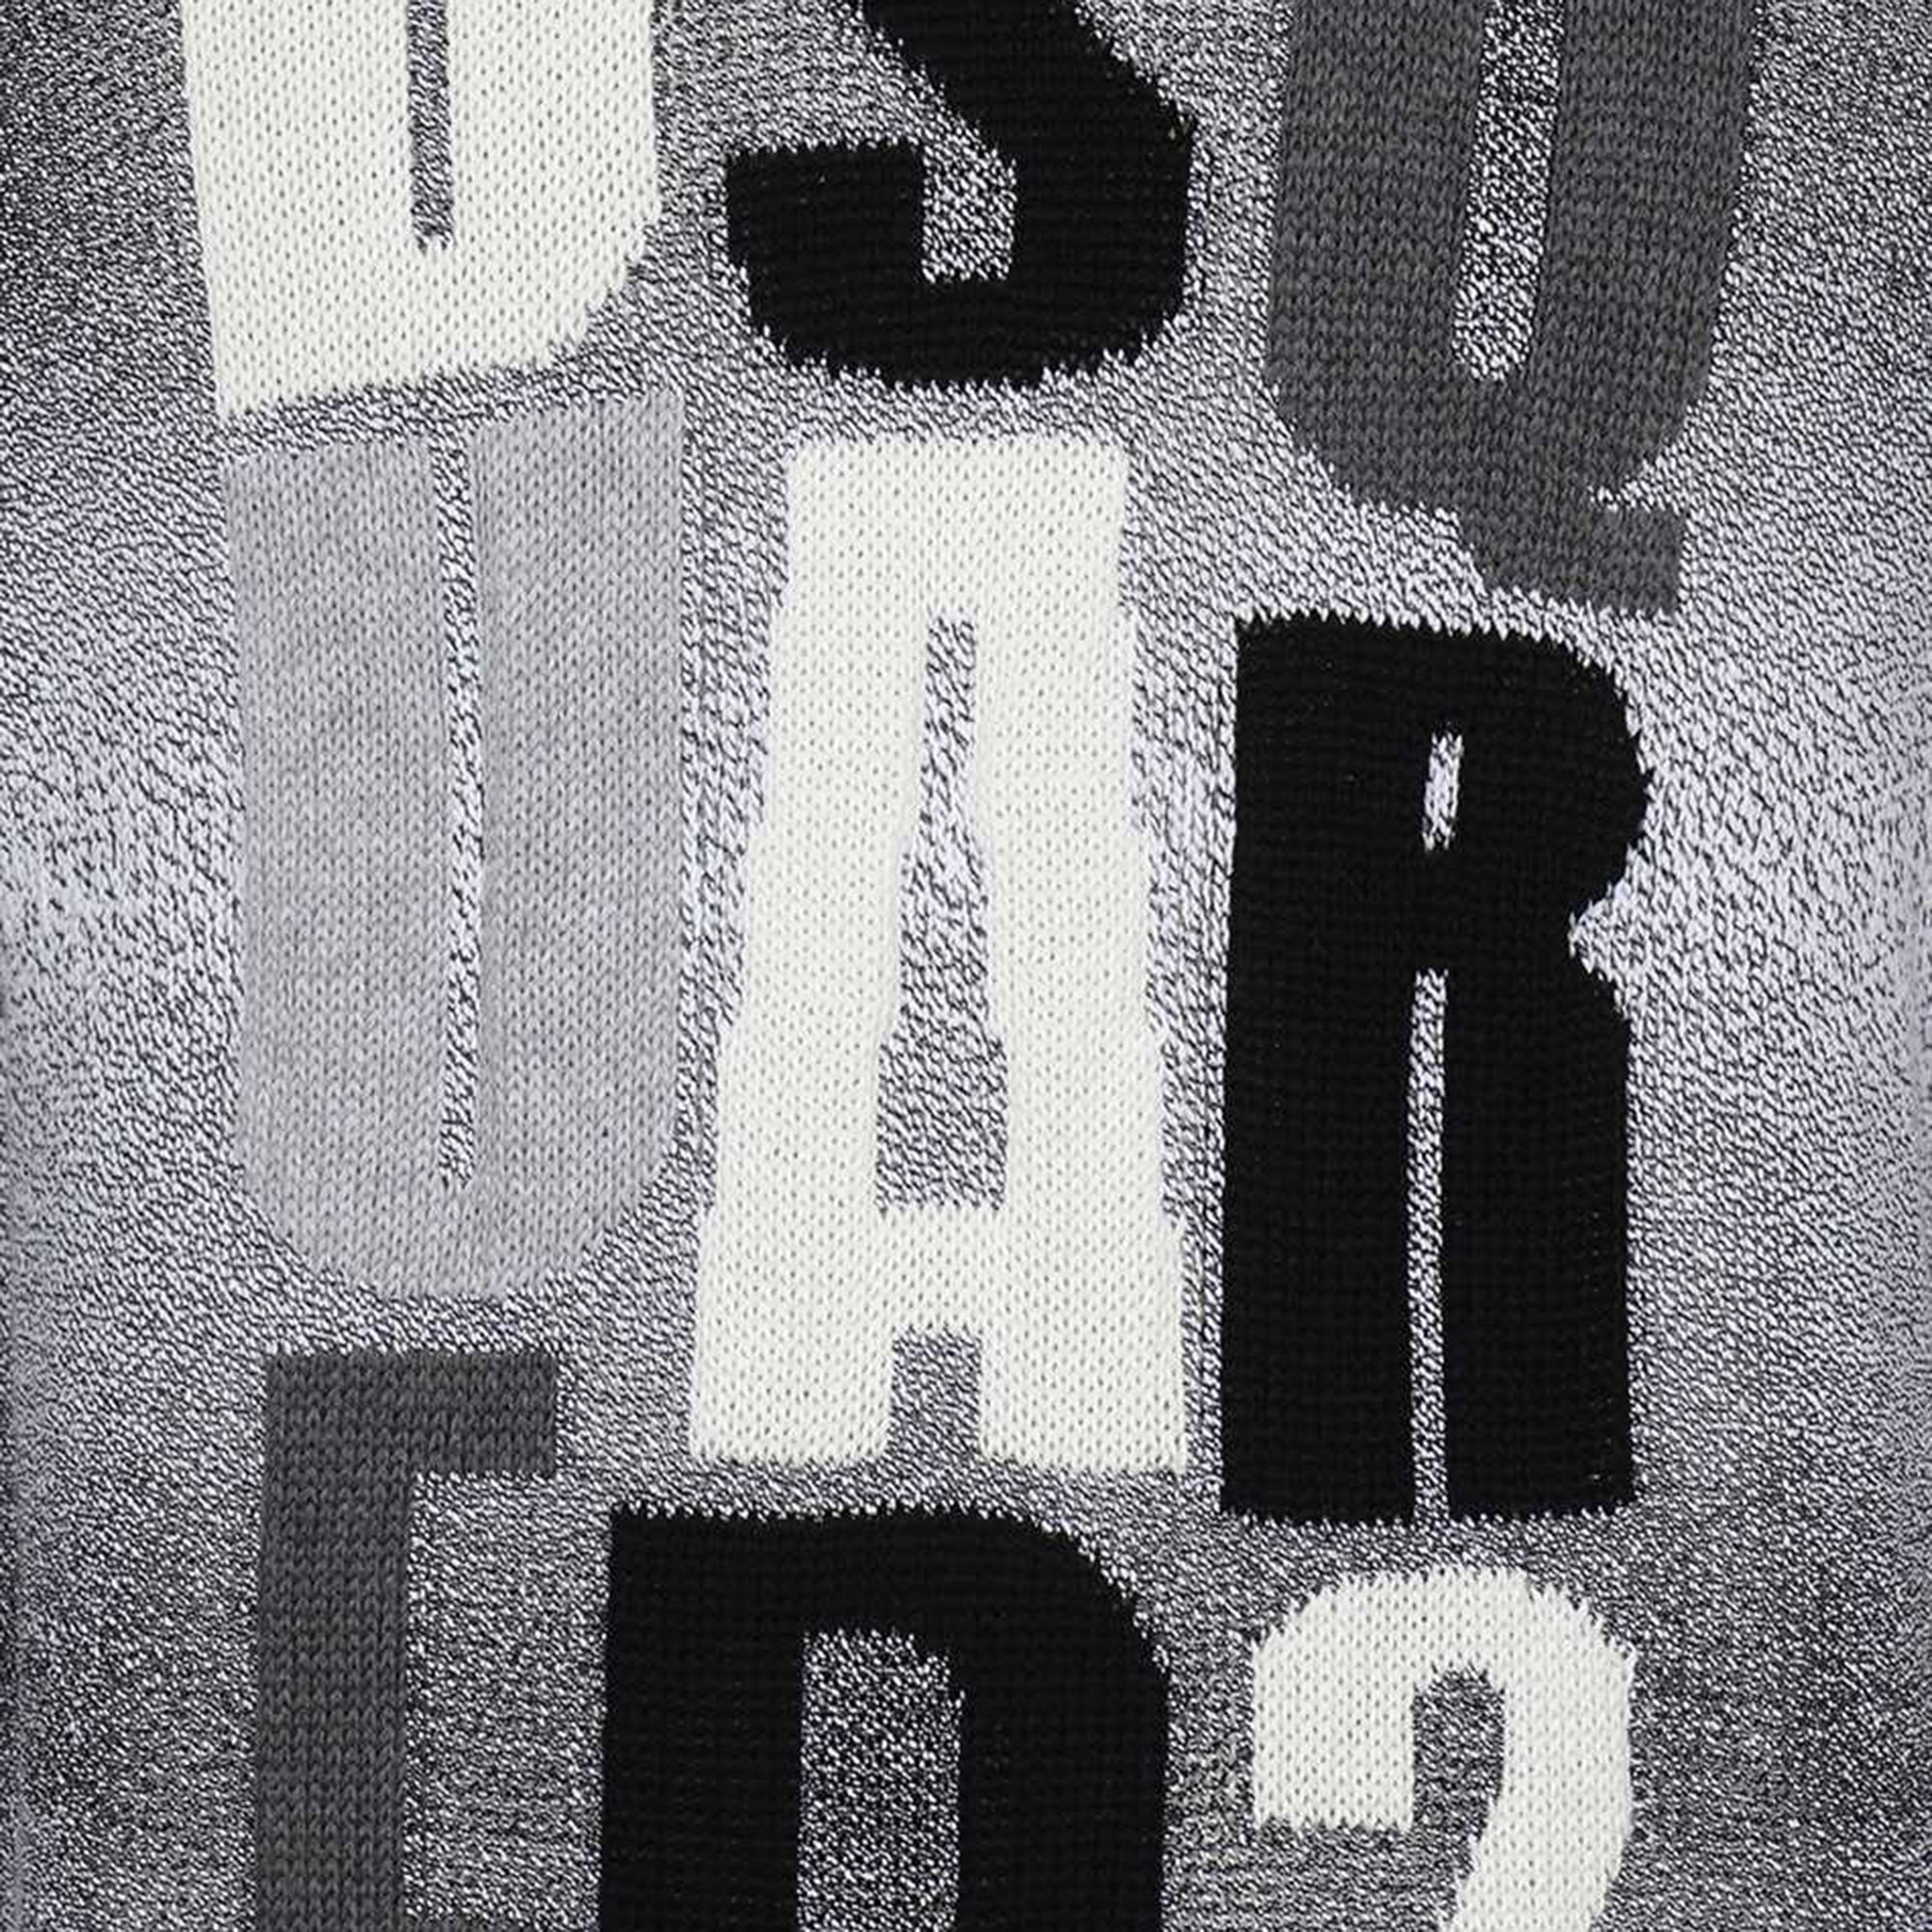 Dsquared2 Mens D2 Monogram Knit Sweater Grey